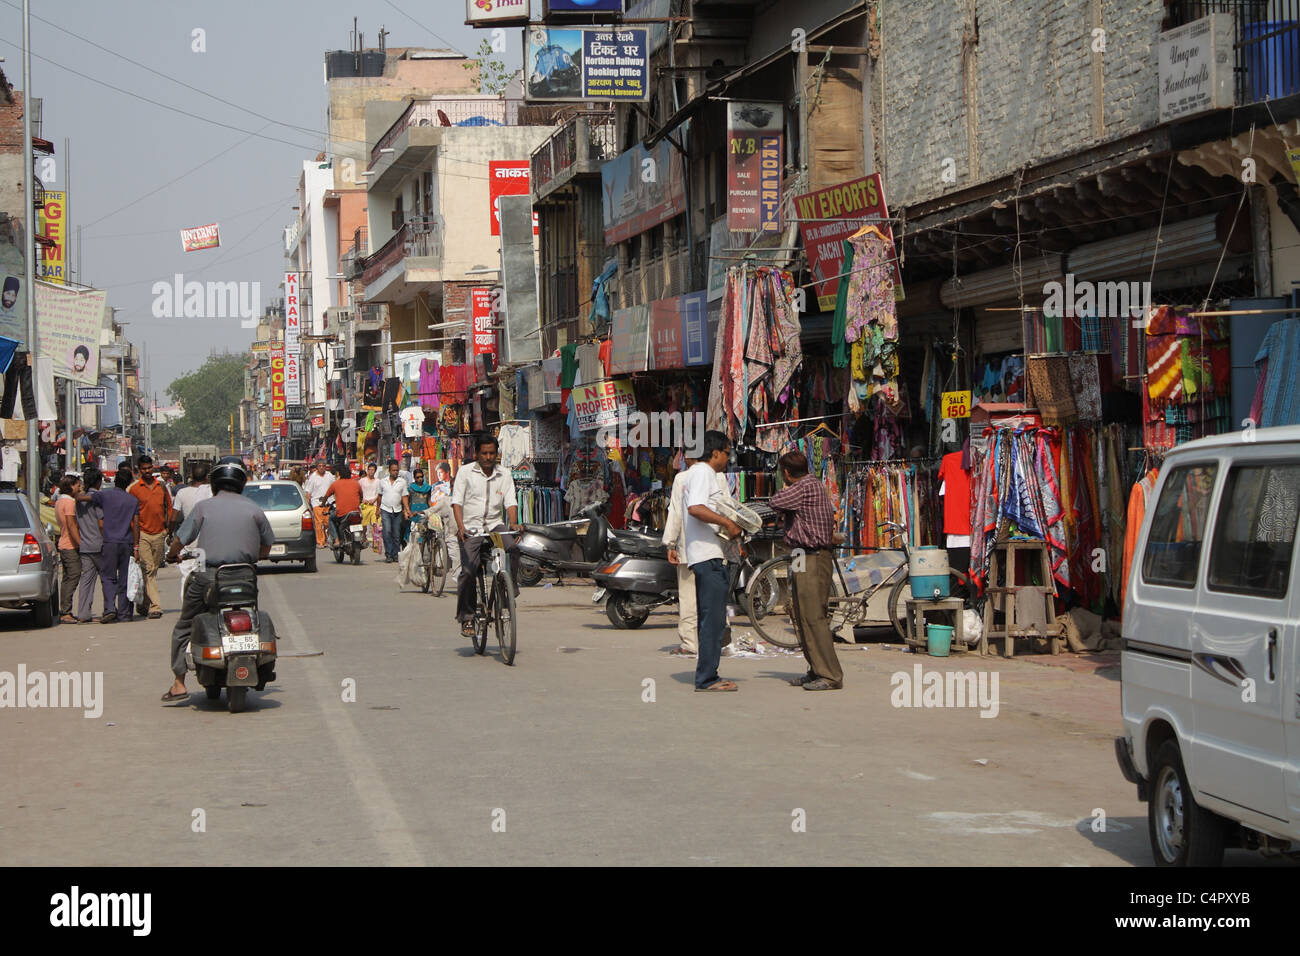 busy city street in india market Stock Photo